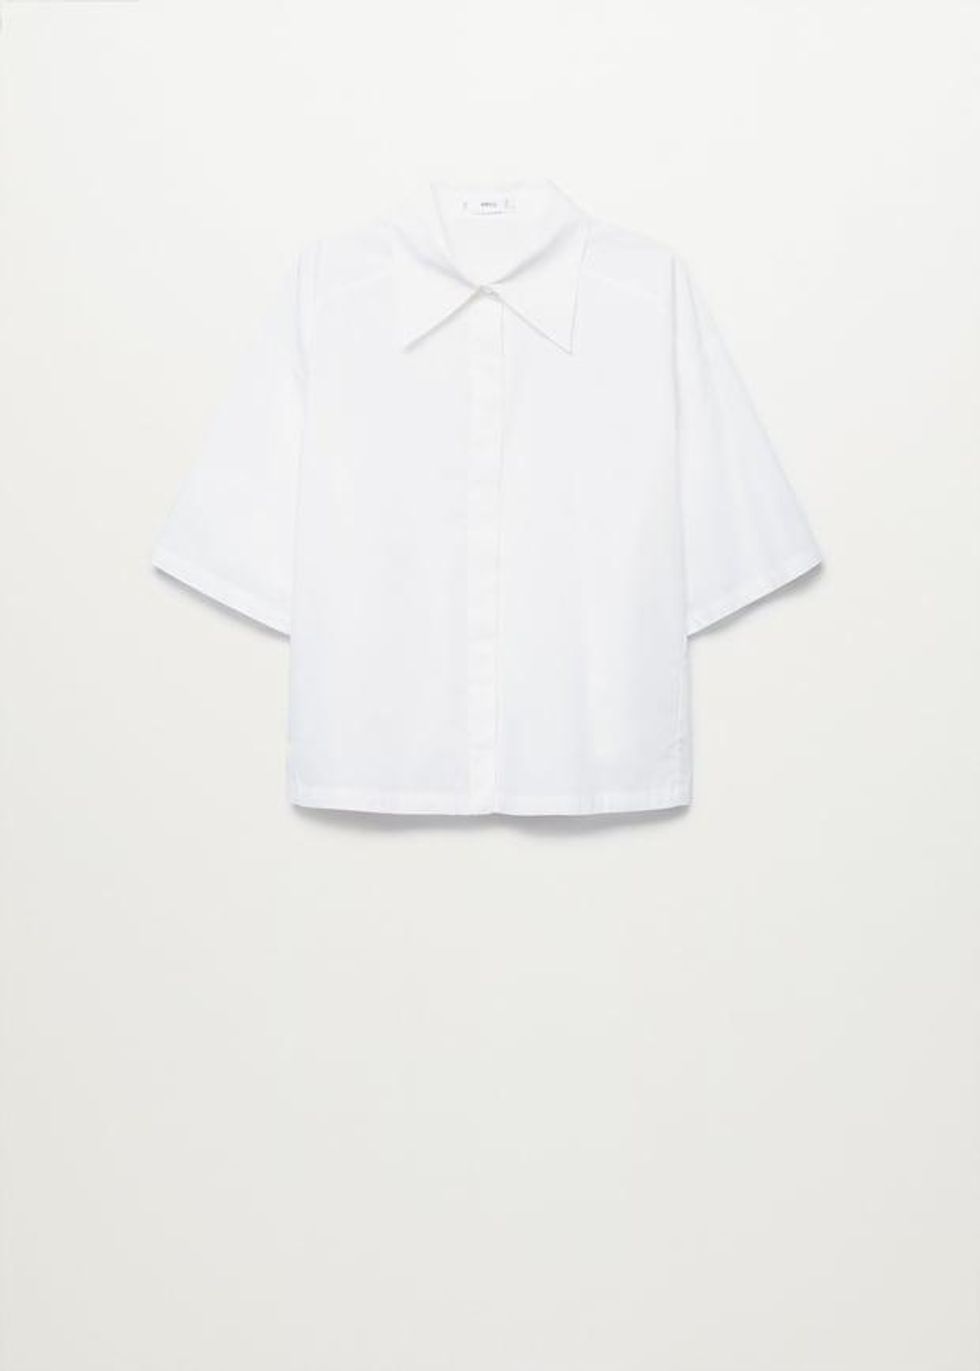 Shop Short-Sleeve Button-Down Shirts - Coveteur: Inside Closets ...